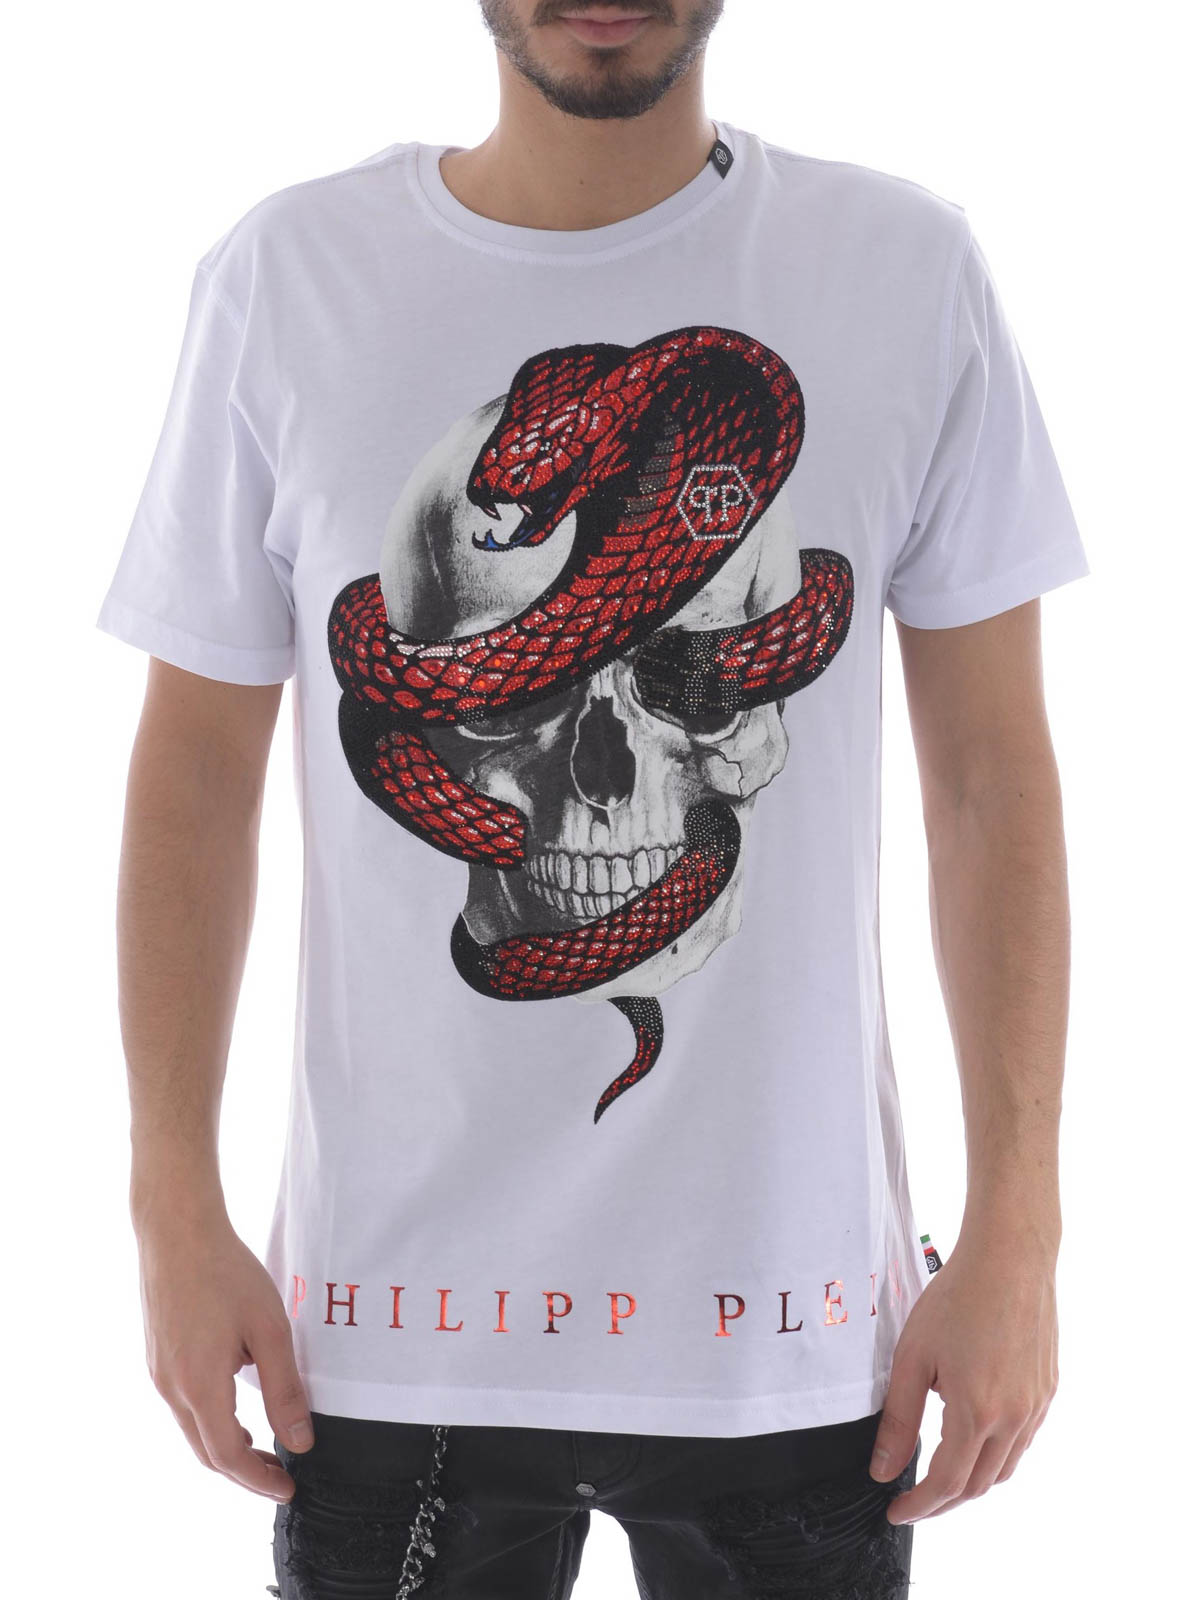 philipp plein snake t shirt